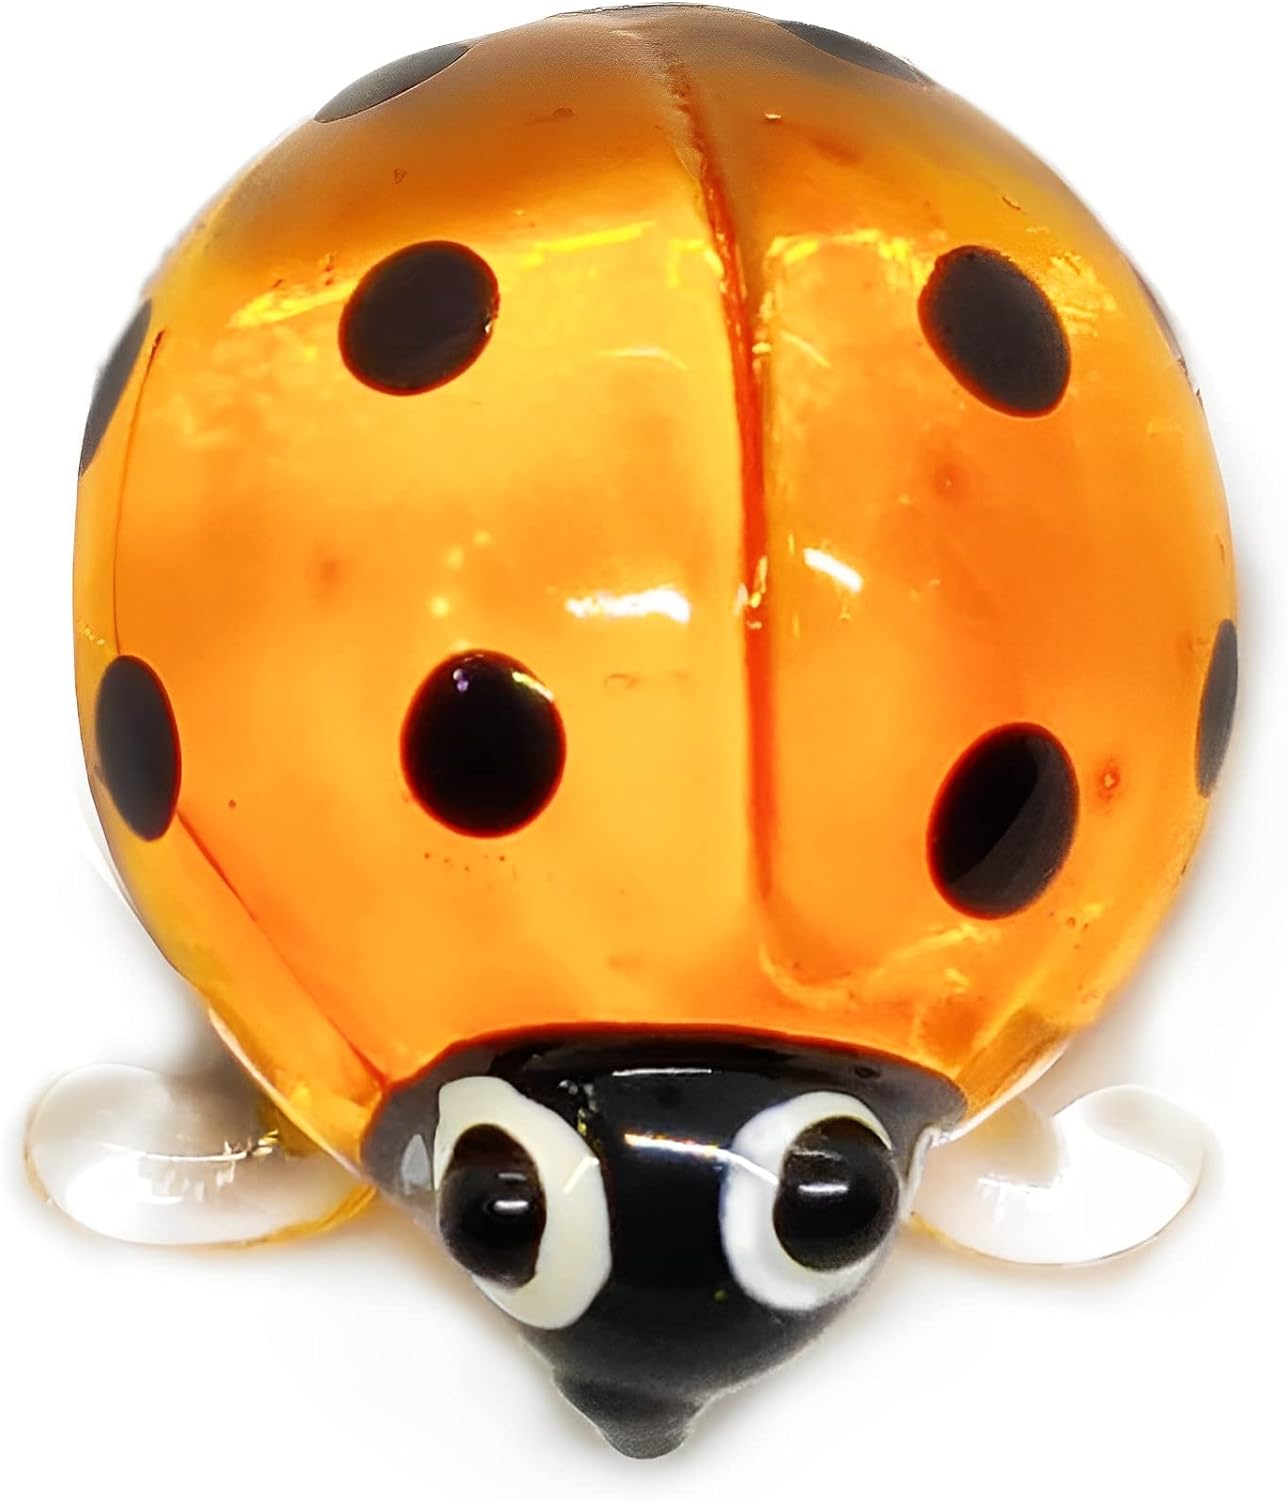 Ladybug Figurine Red & Orange Cute Ladybird Blown Glass Insect Terrarium Gift Garden Decor Set of 3